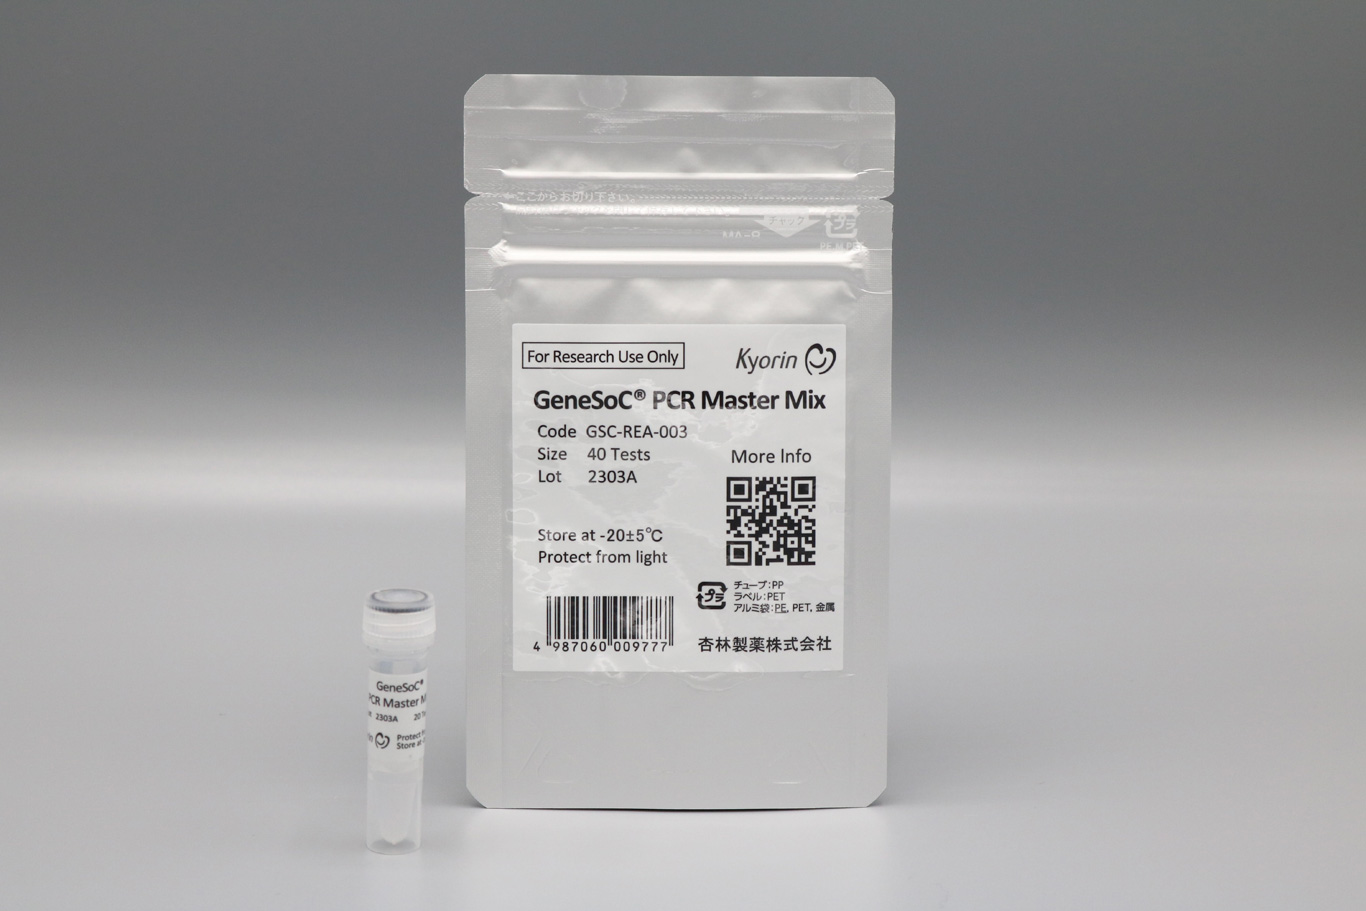 GeneSoC® PCR Master Mix